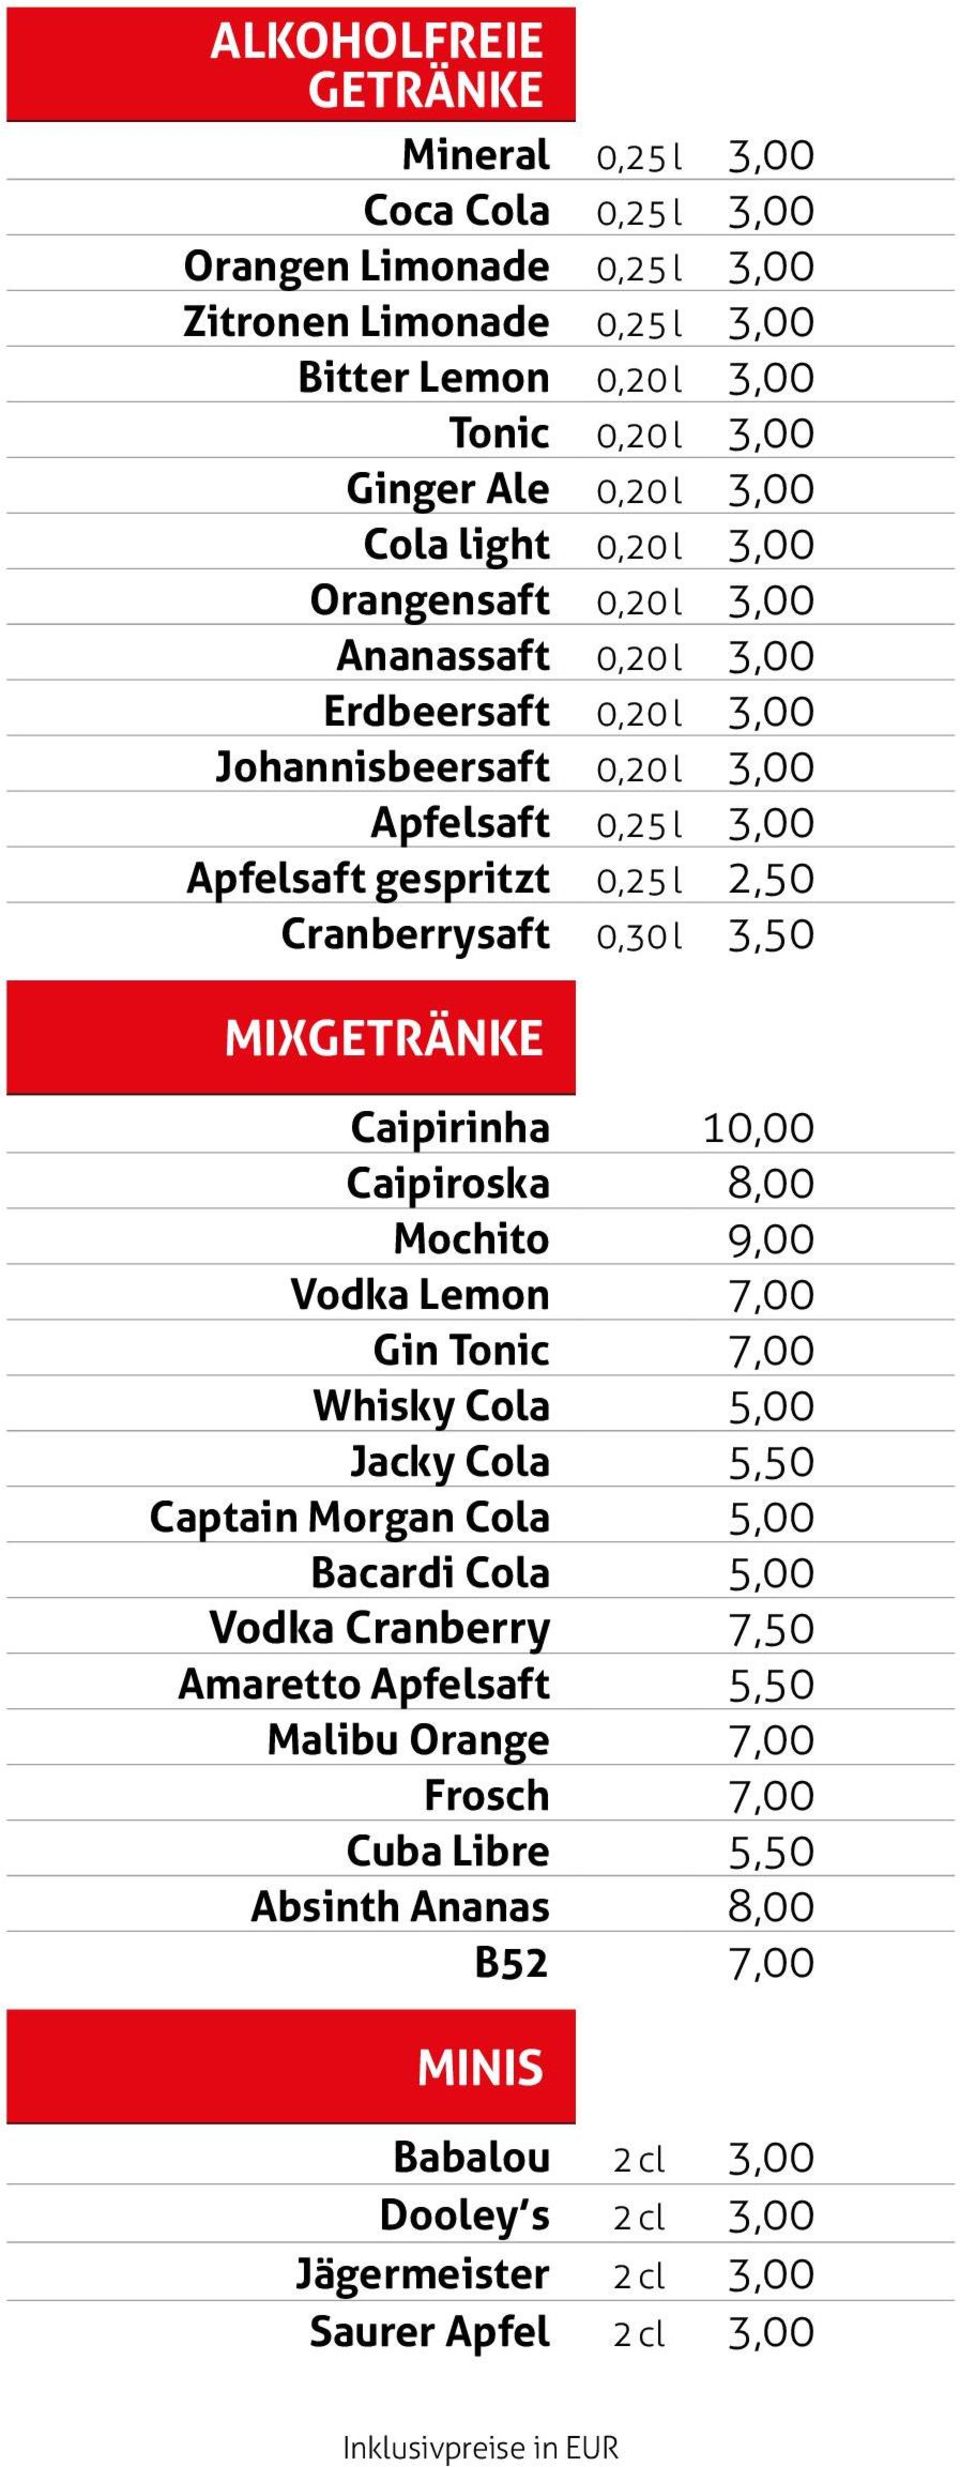 3,50 Mixgetränke Caipirinha 10,00 Caipiroska Mochito 9,00 Vodka Lemon 7,00 Gin Tonic 7,00 Whisky Cola 5,00 Jacky Cola 5,50 Captain Morgan Cola 5,00 Bacardi Cola 5,00 Vodka Cranberry 7,50